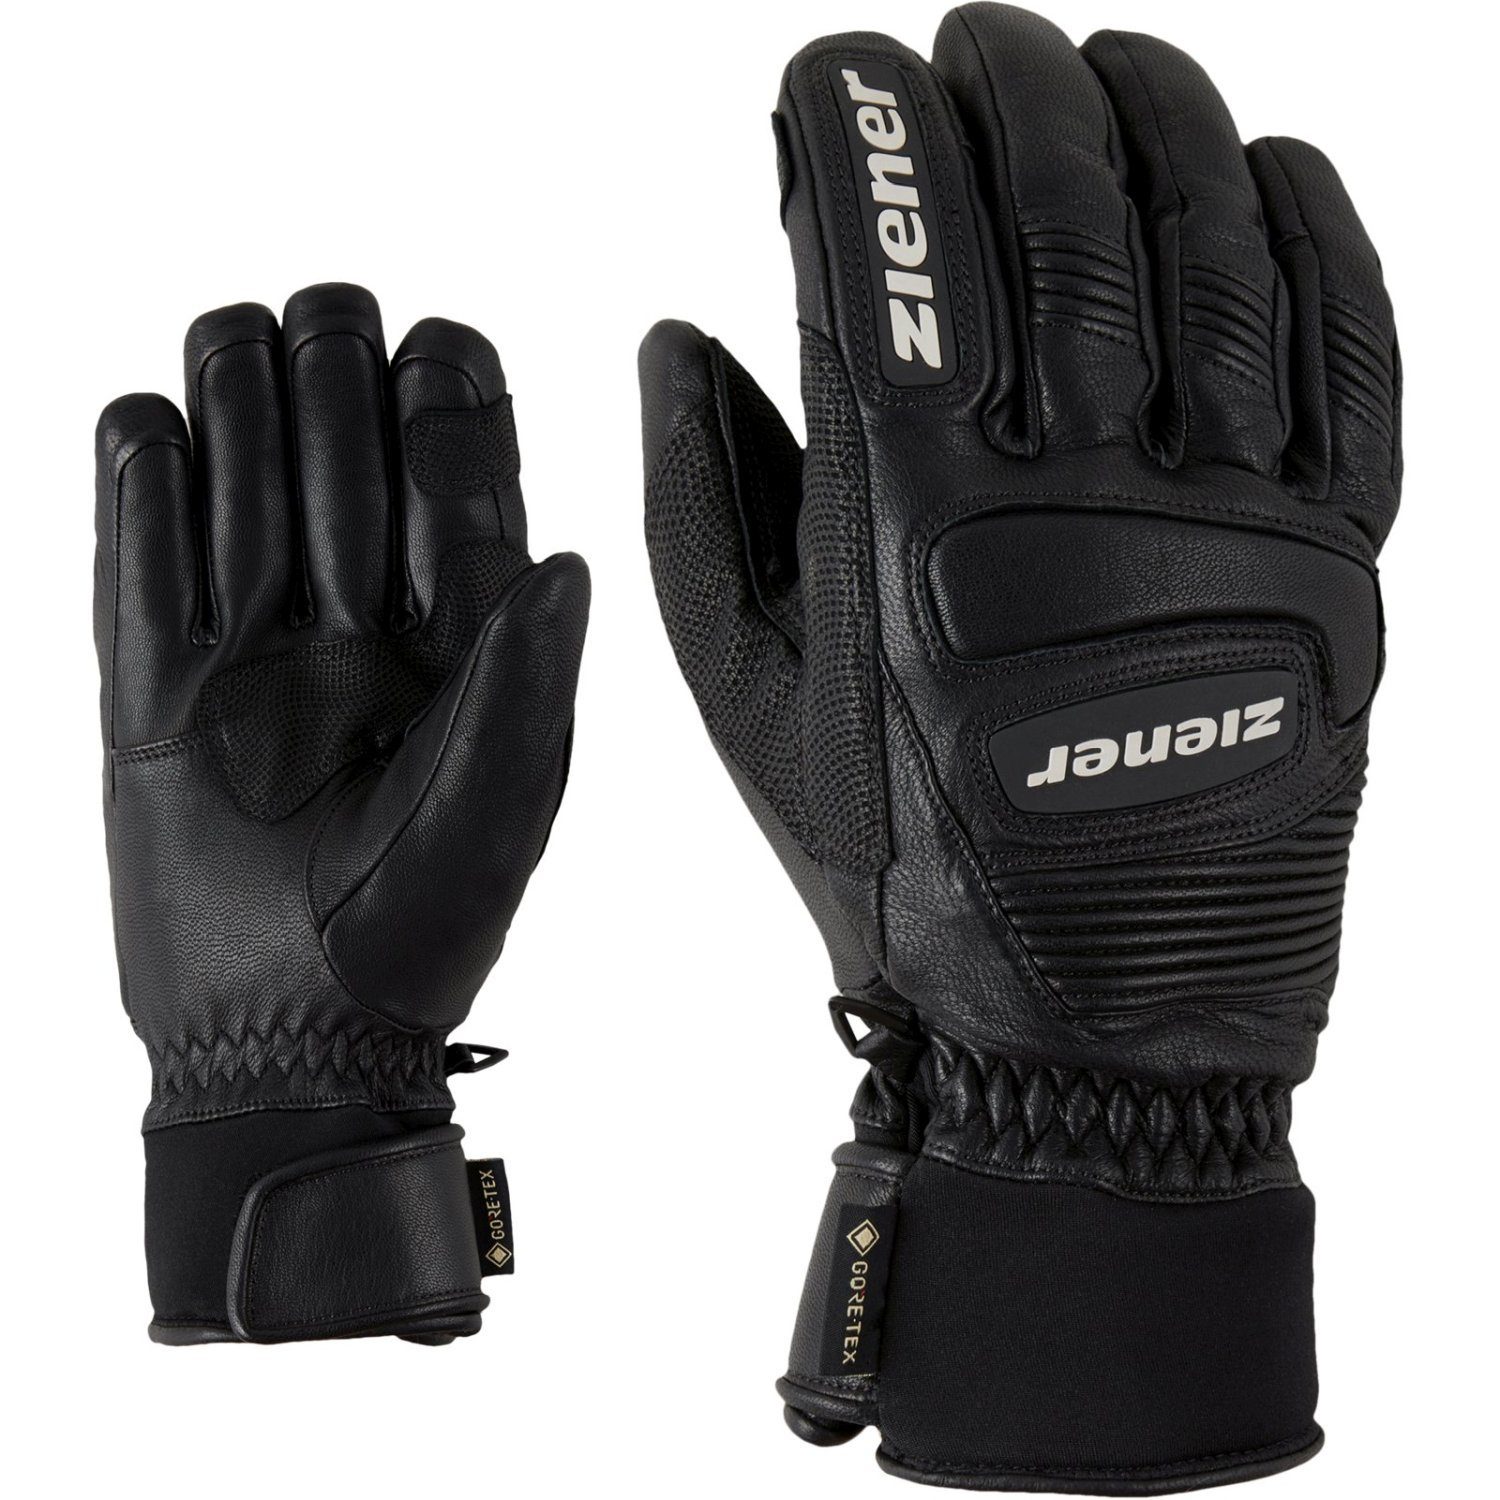 Alpine Ziener Handschuhe Gloves Accessoires Winter GORETEX, GUARD Skihandschuhe Ski Ski Ziener